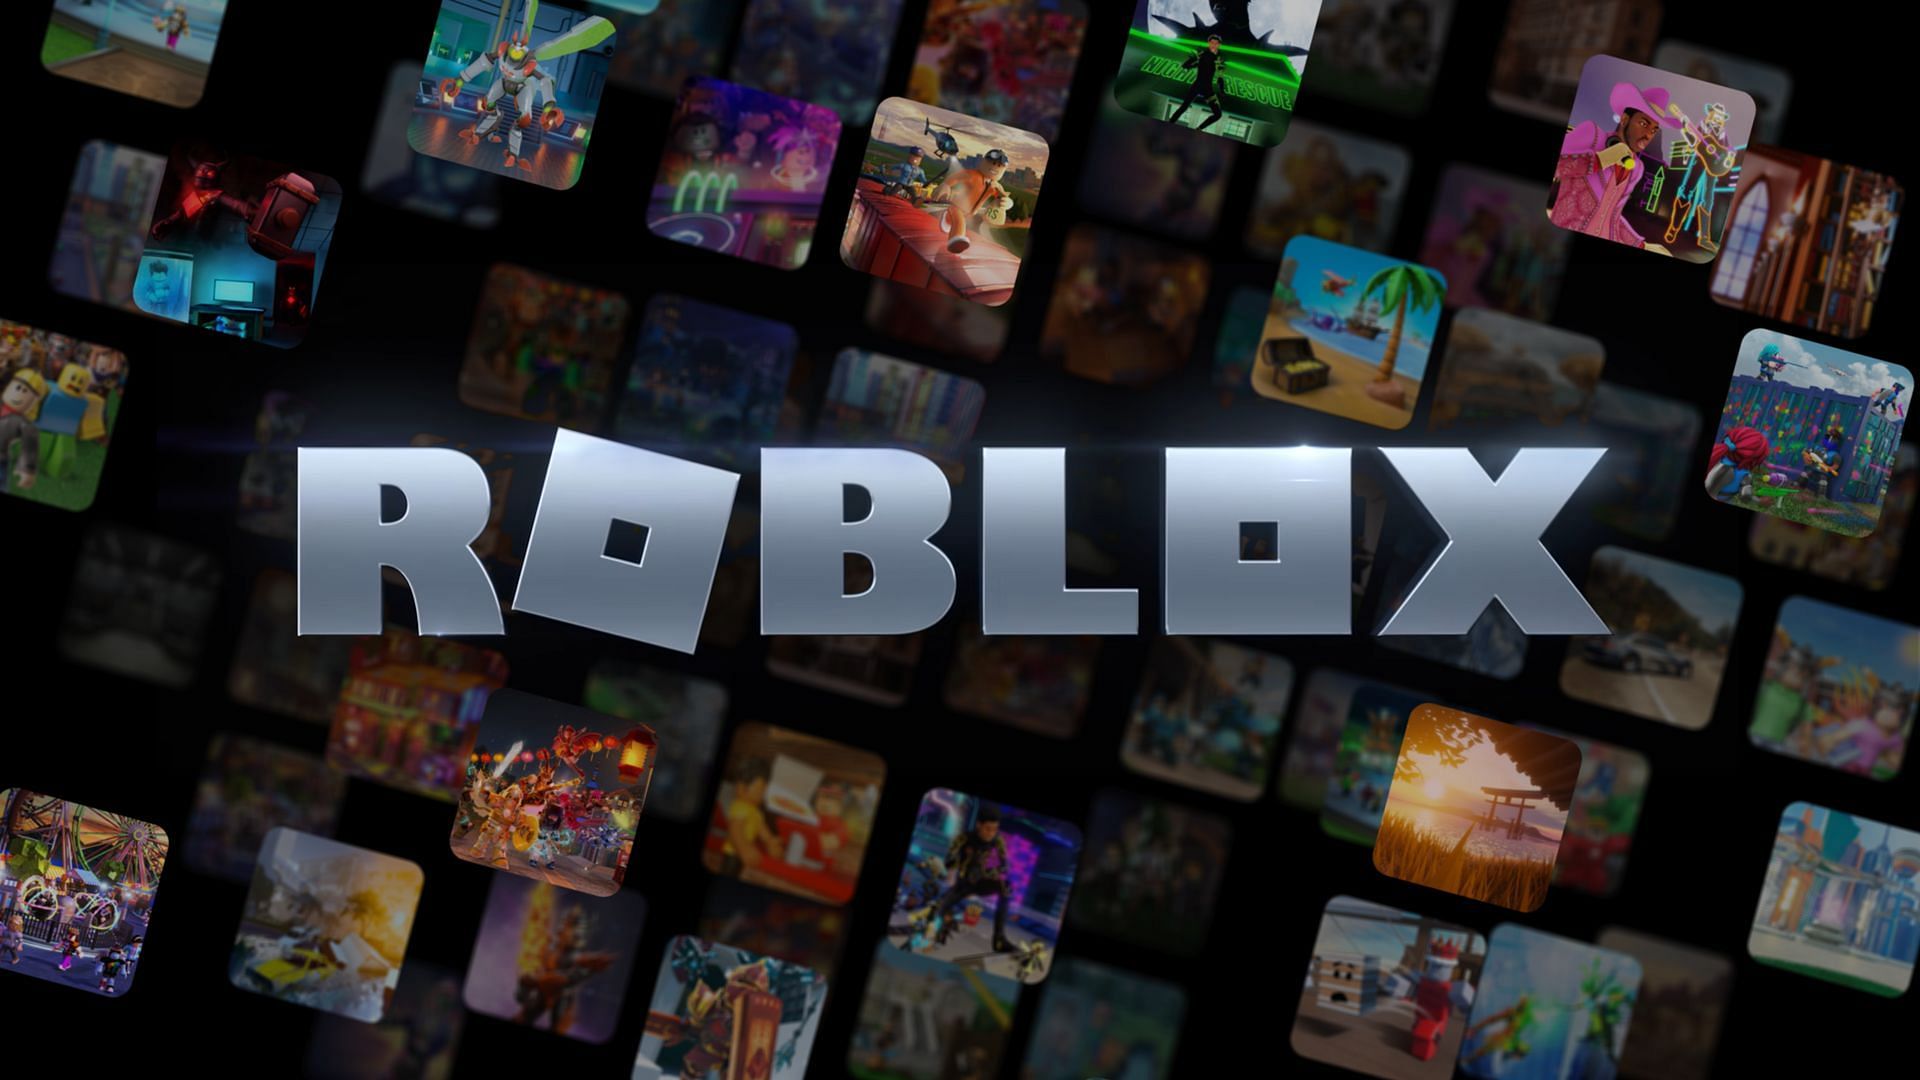 Star codes can support Roblox content creators (Image via Roblox)